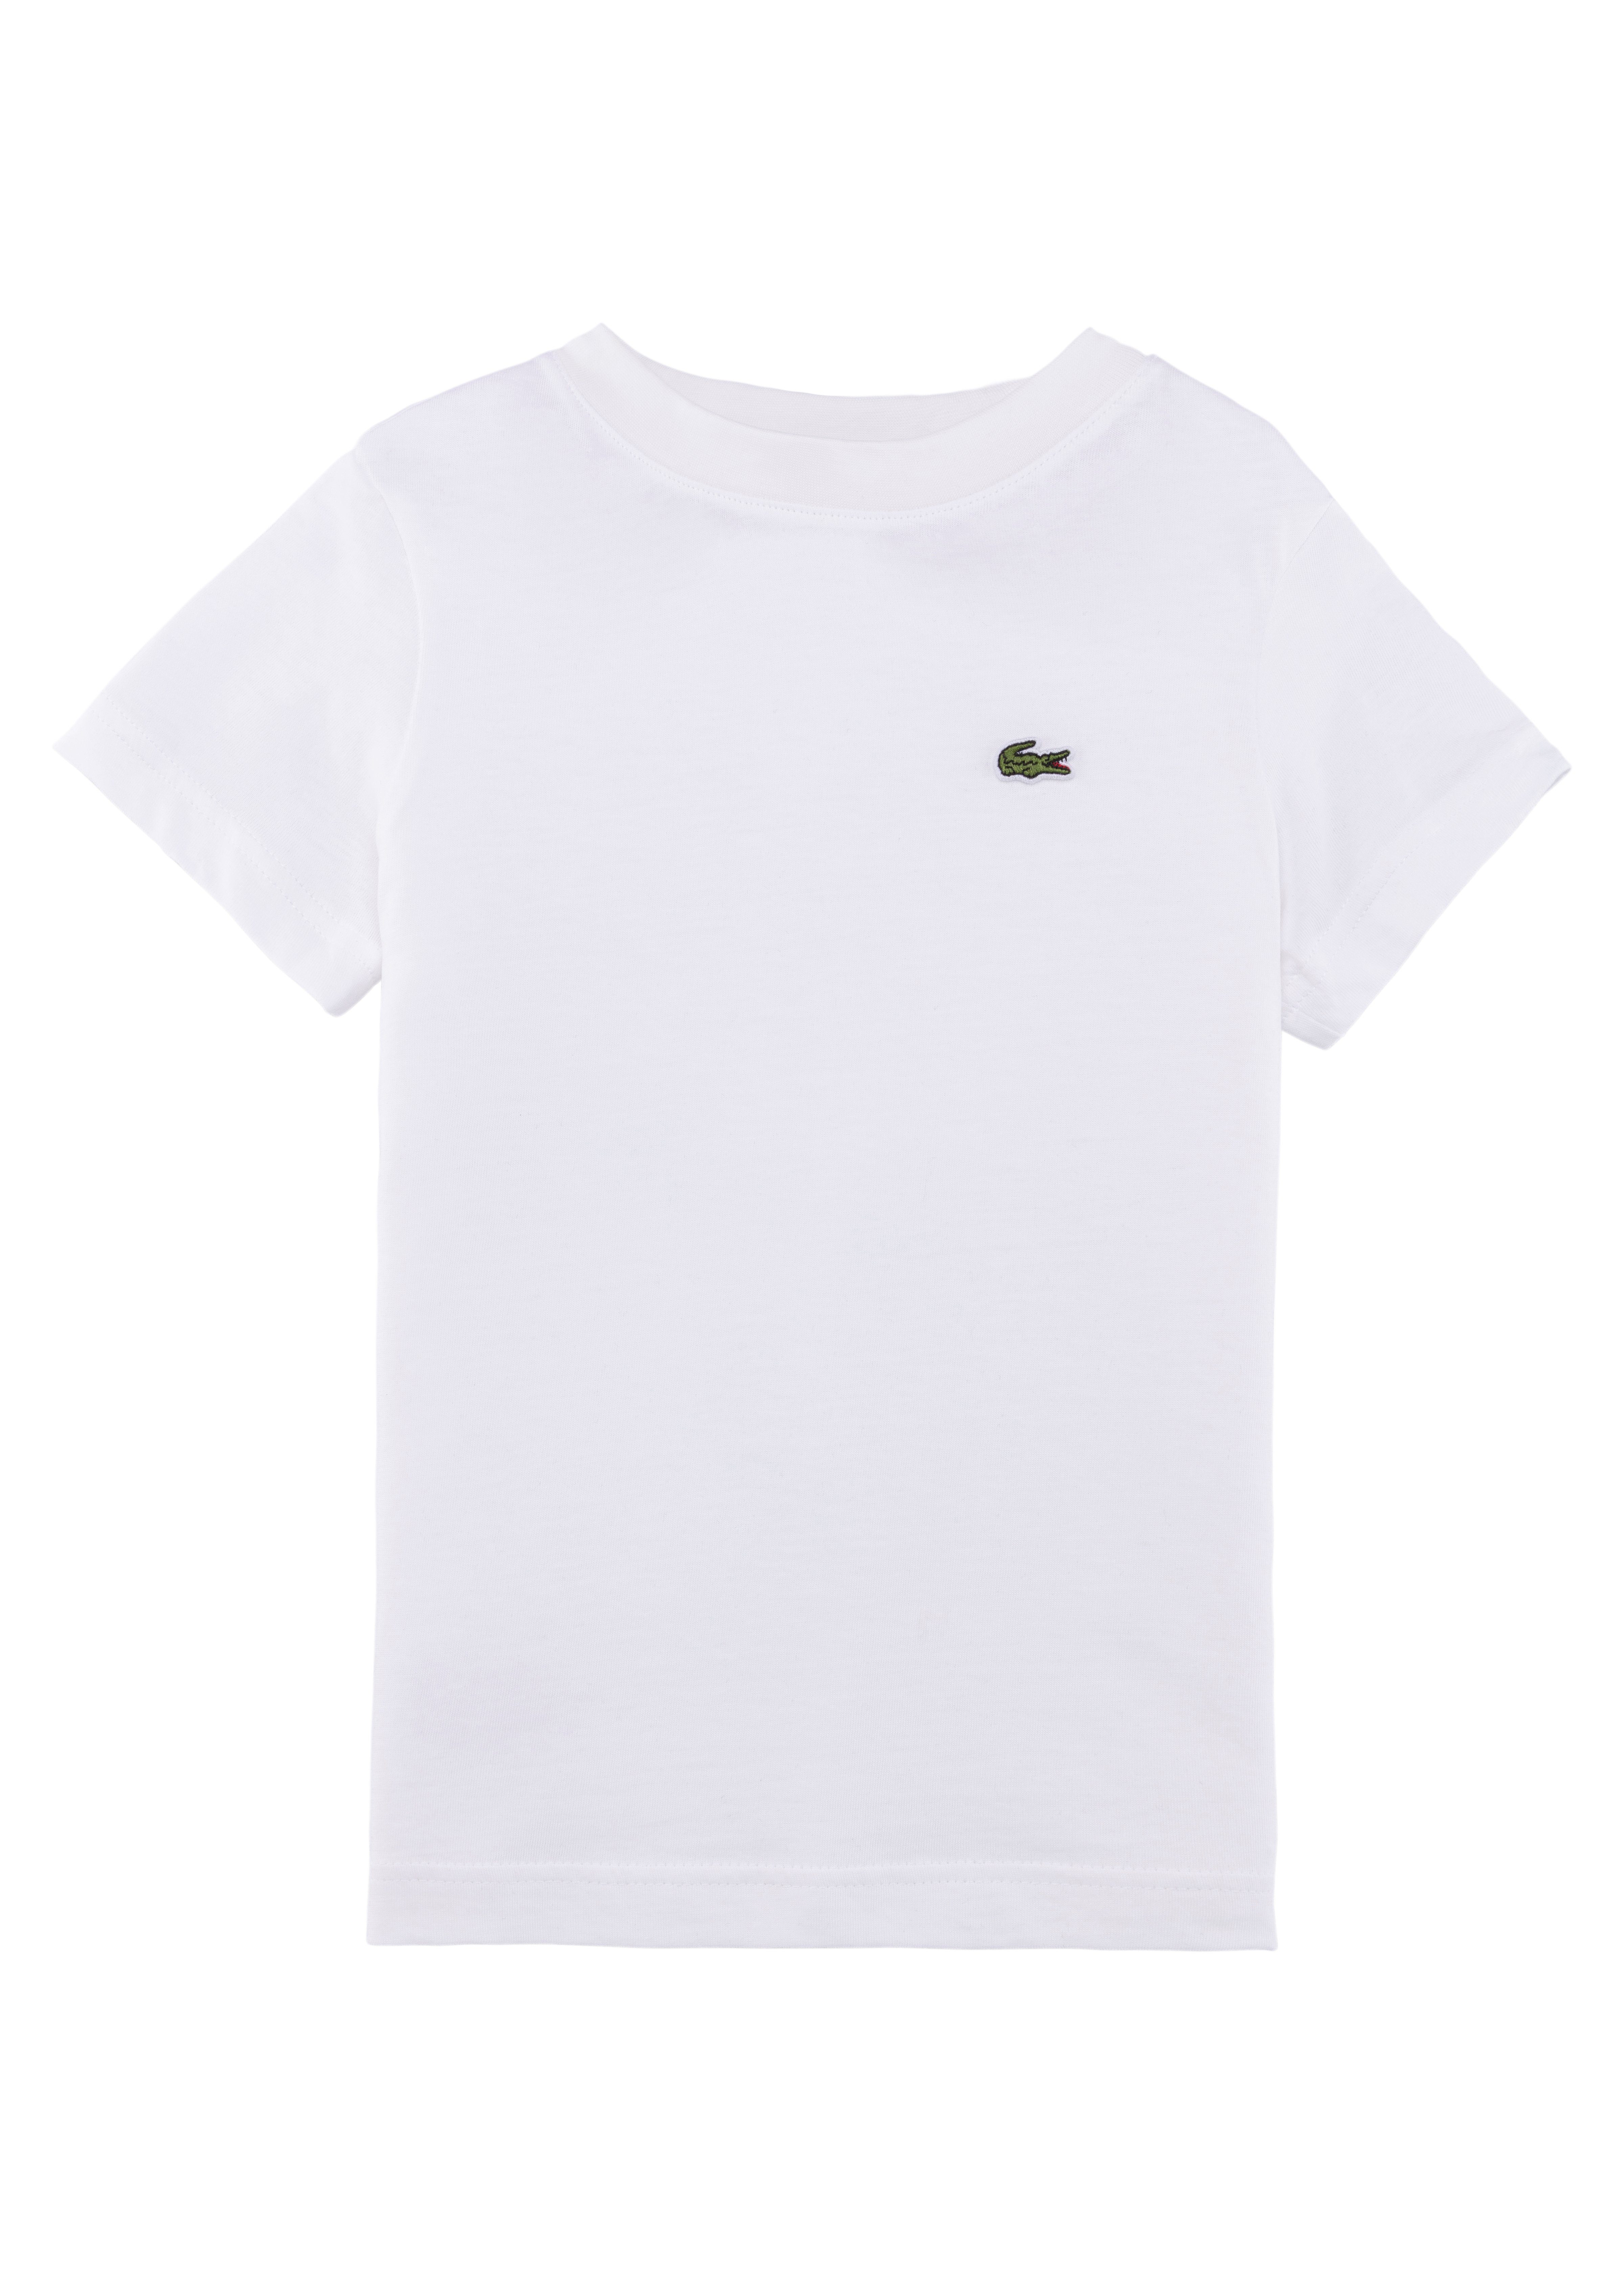 Lacoste-Krokodil T-Shirt Brusthöhe mit WHITE Lacoste auf